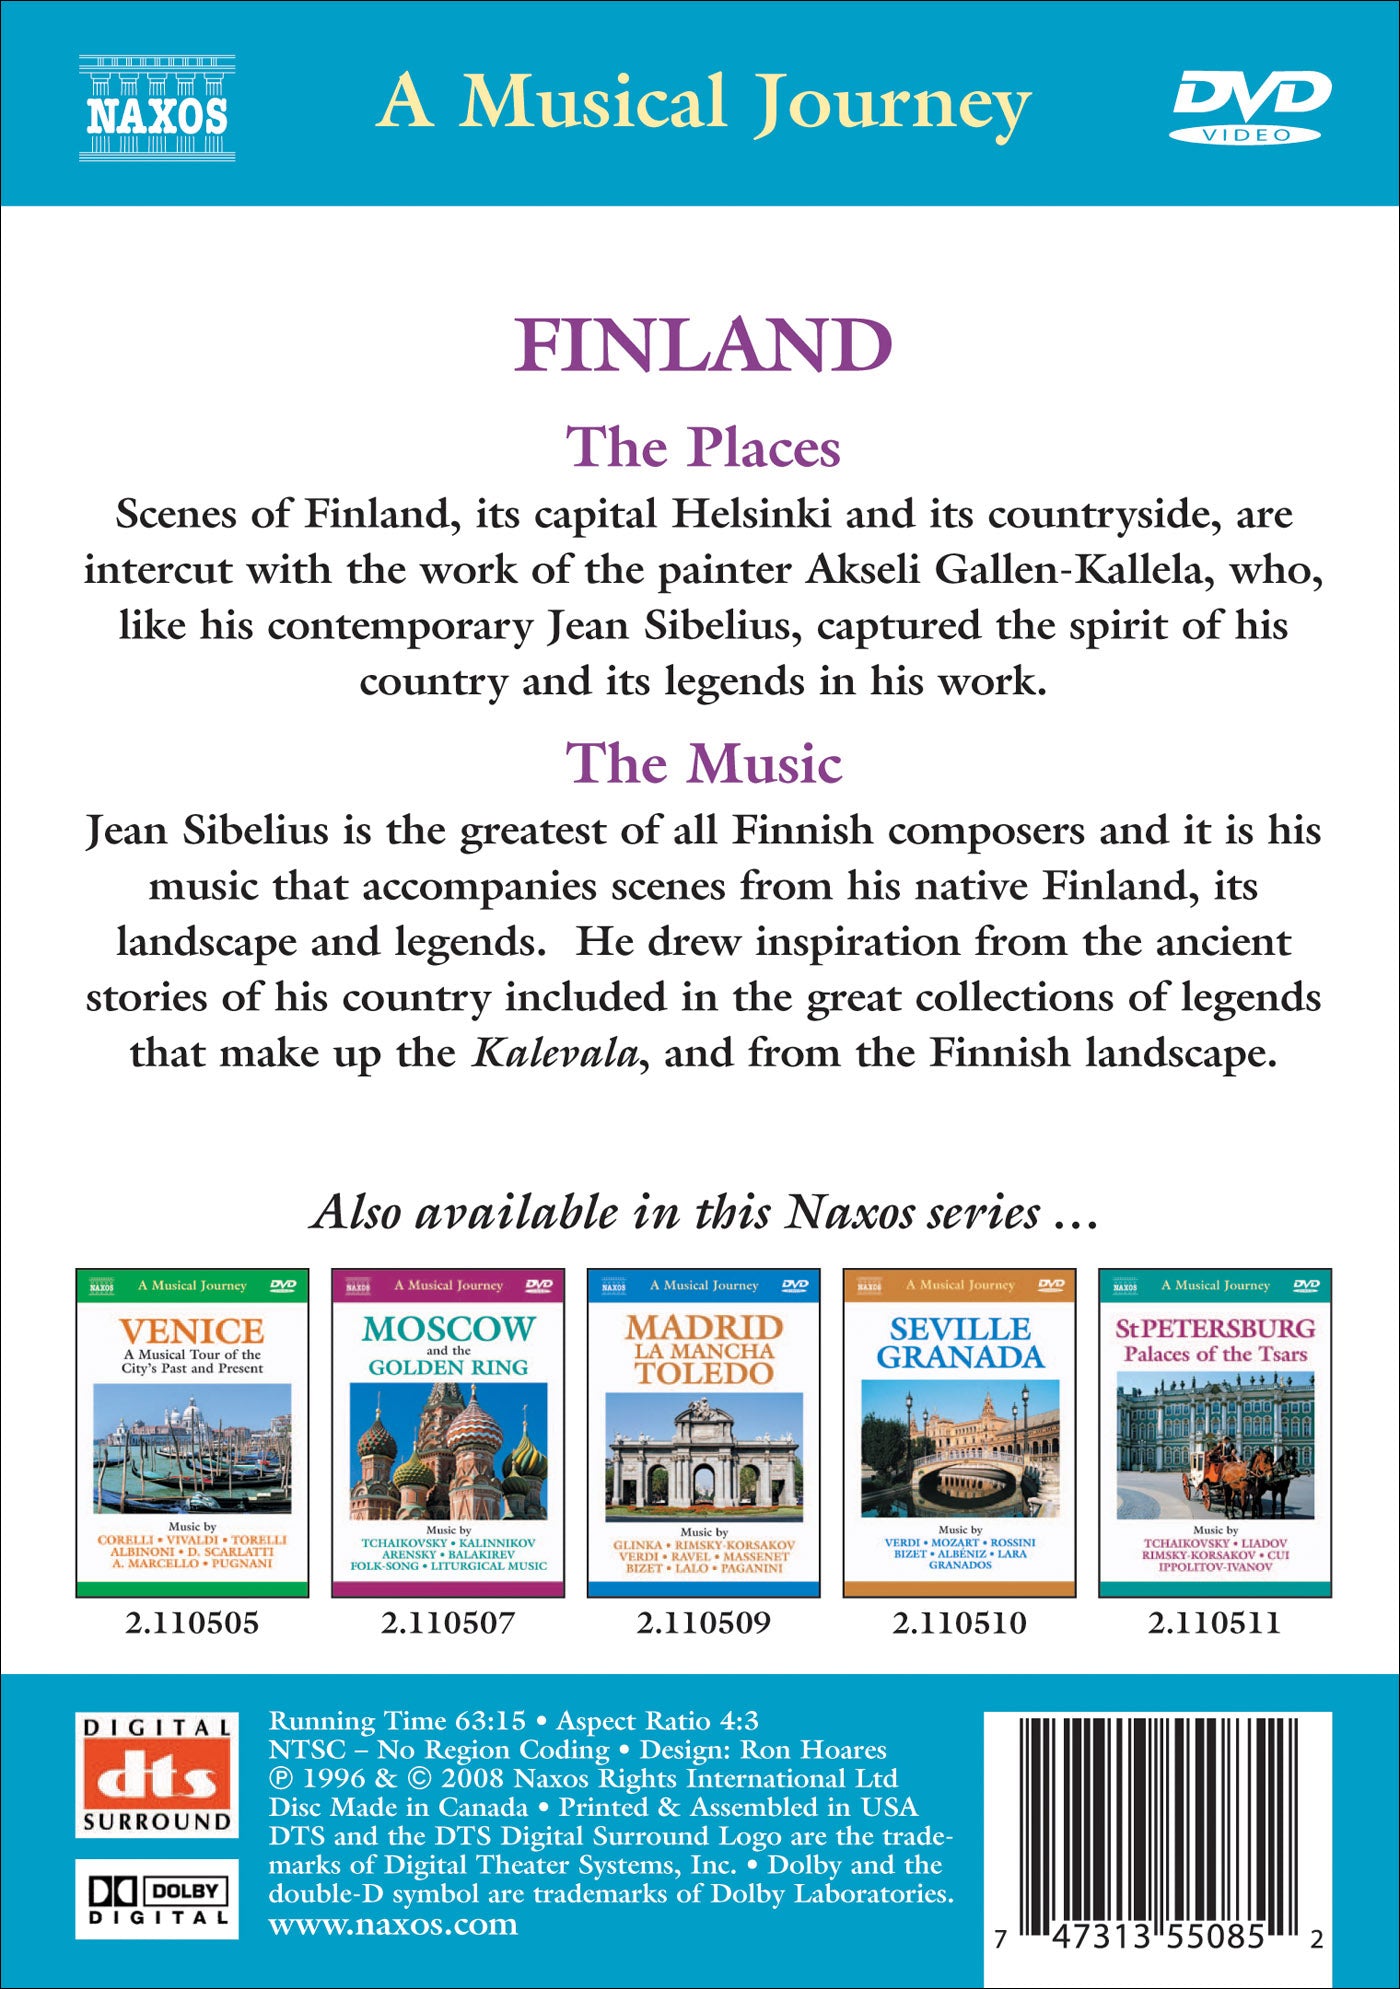 Finland: Helsinki and the Finnish Landscape